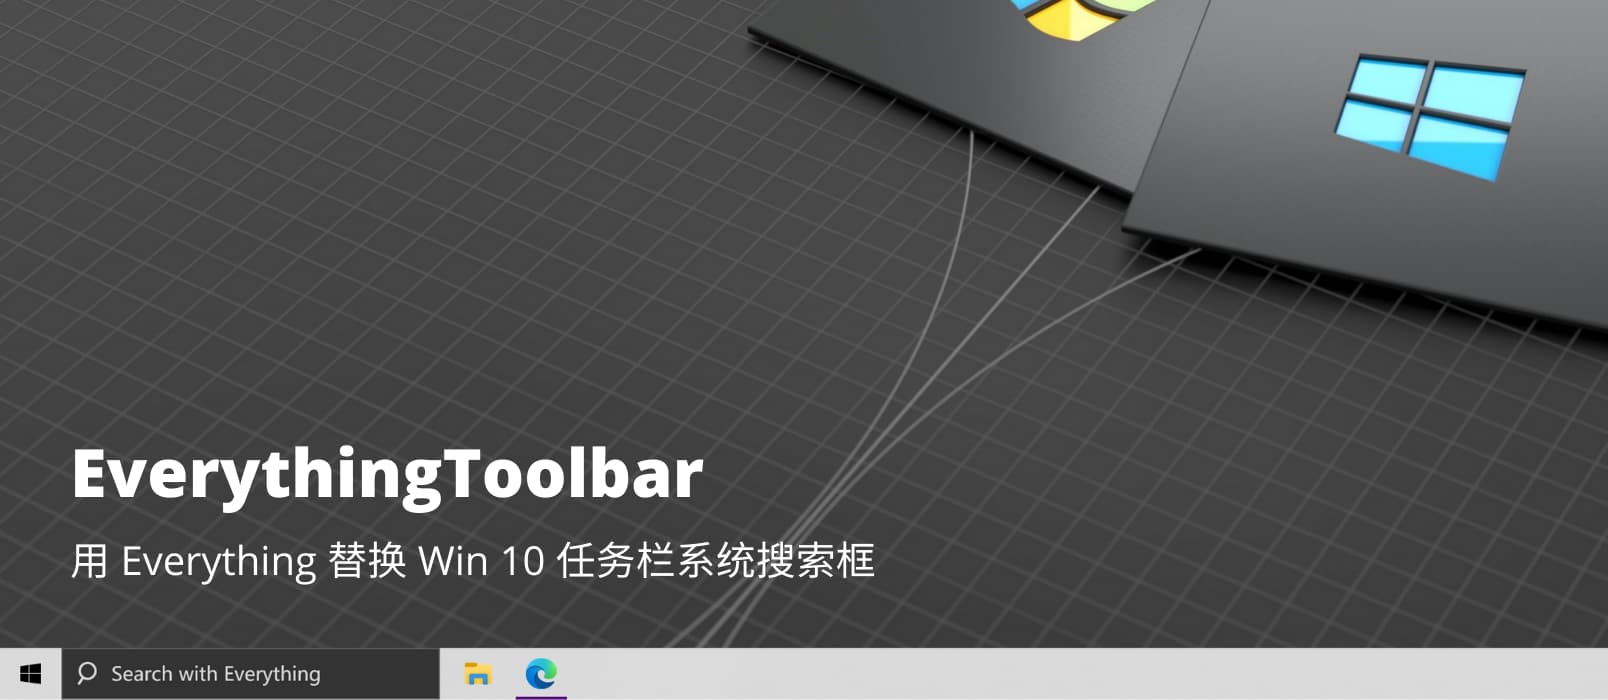 Everything Toolbar - 用 Everything 替换 Win 10 任务栏系统搜索框